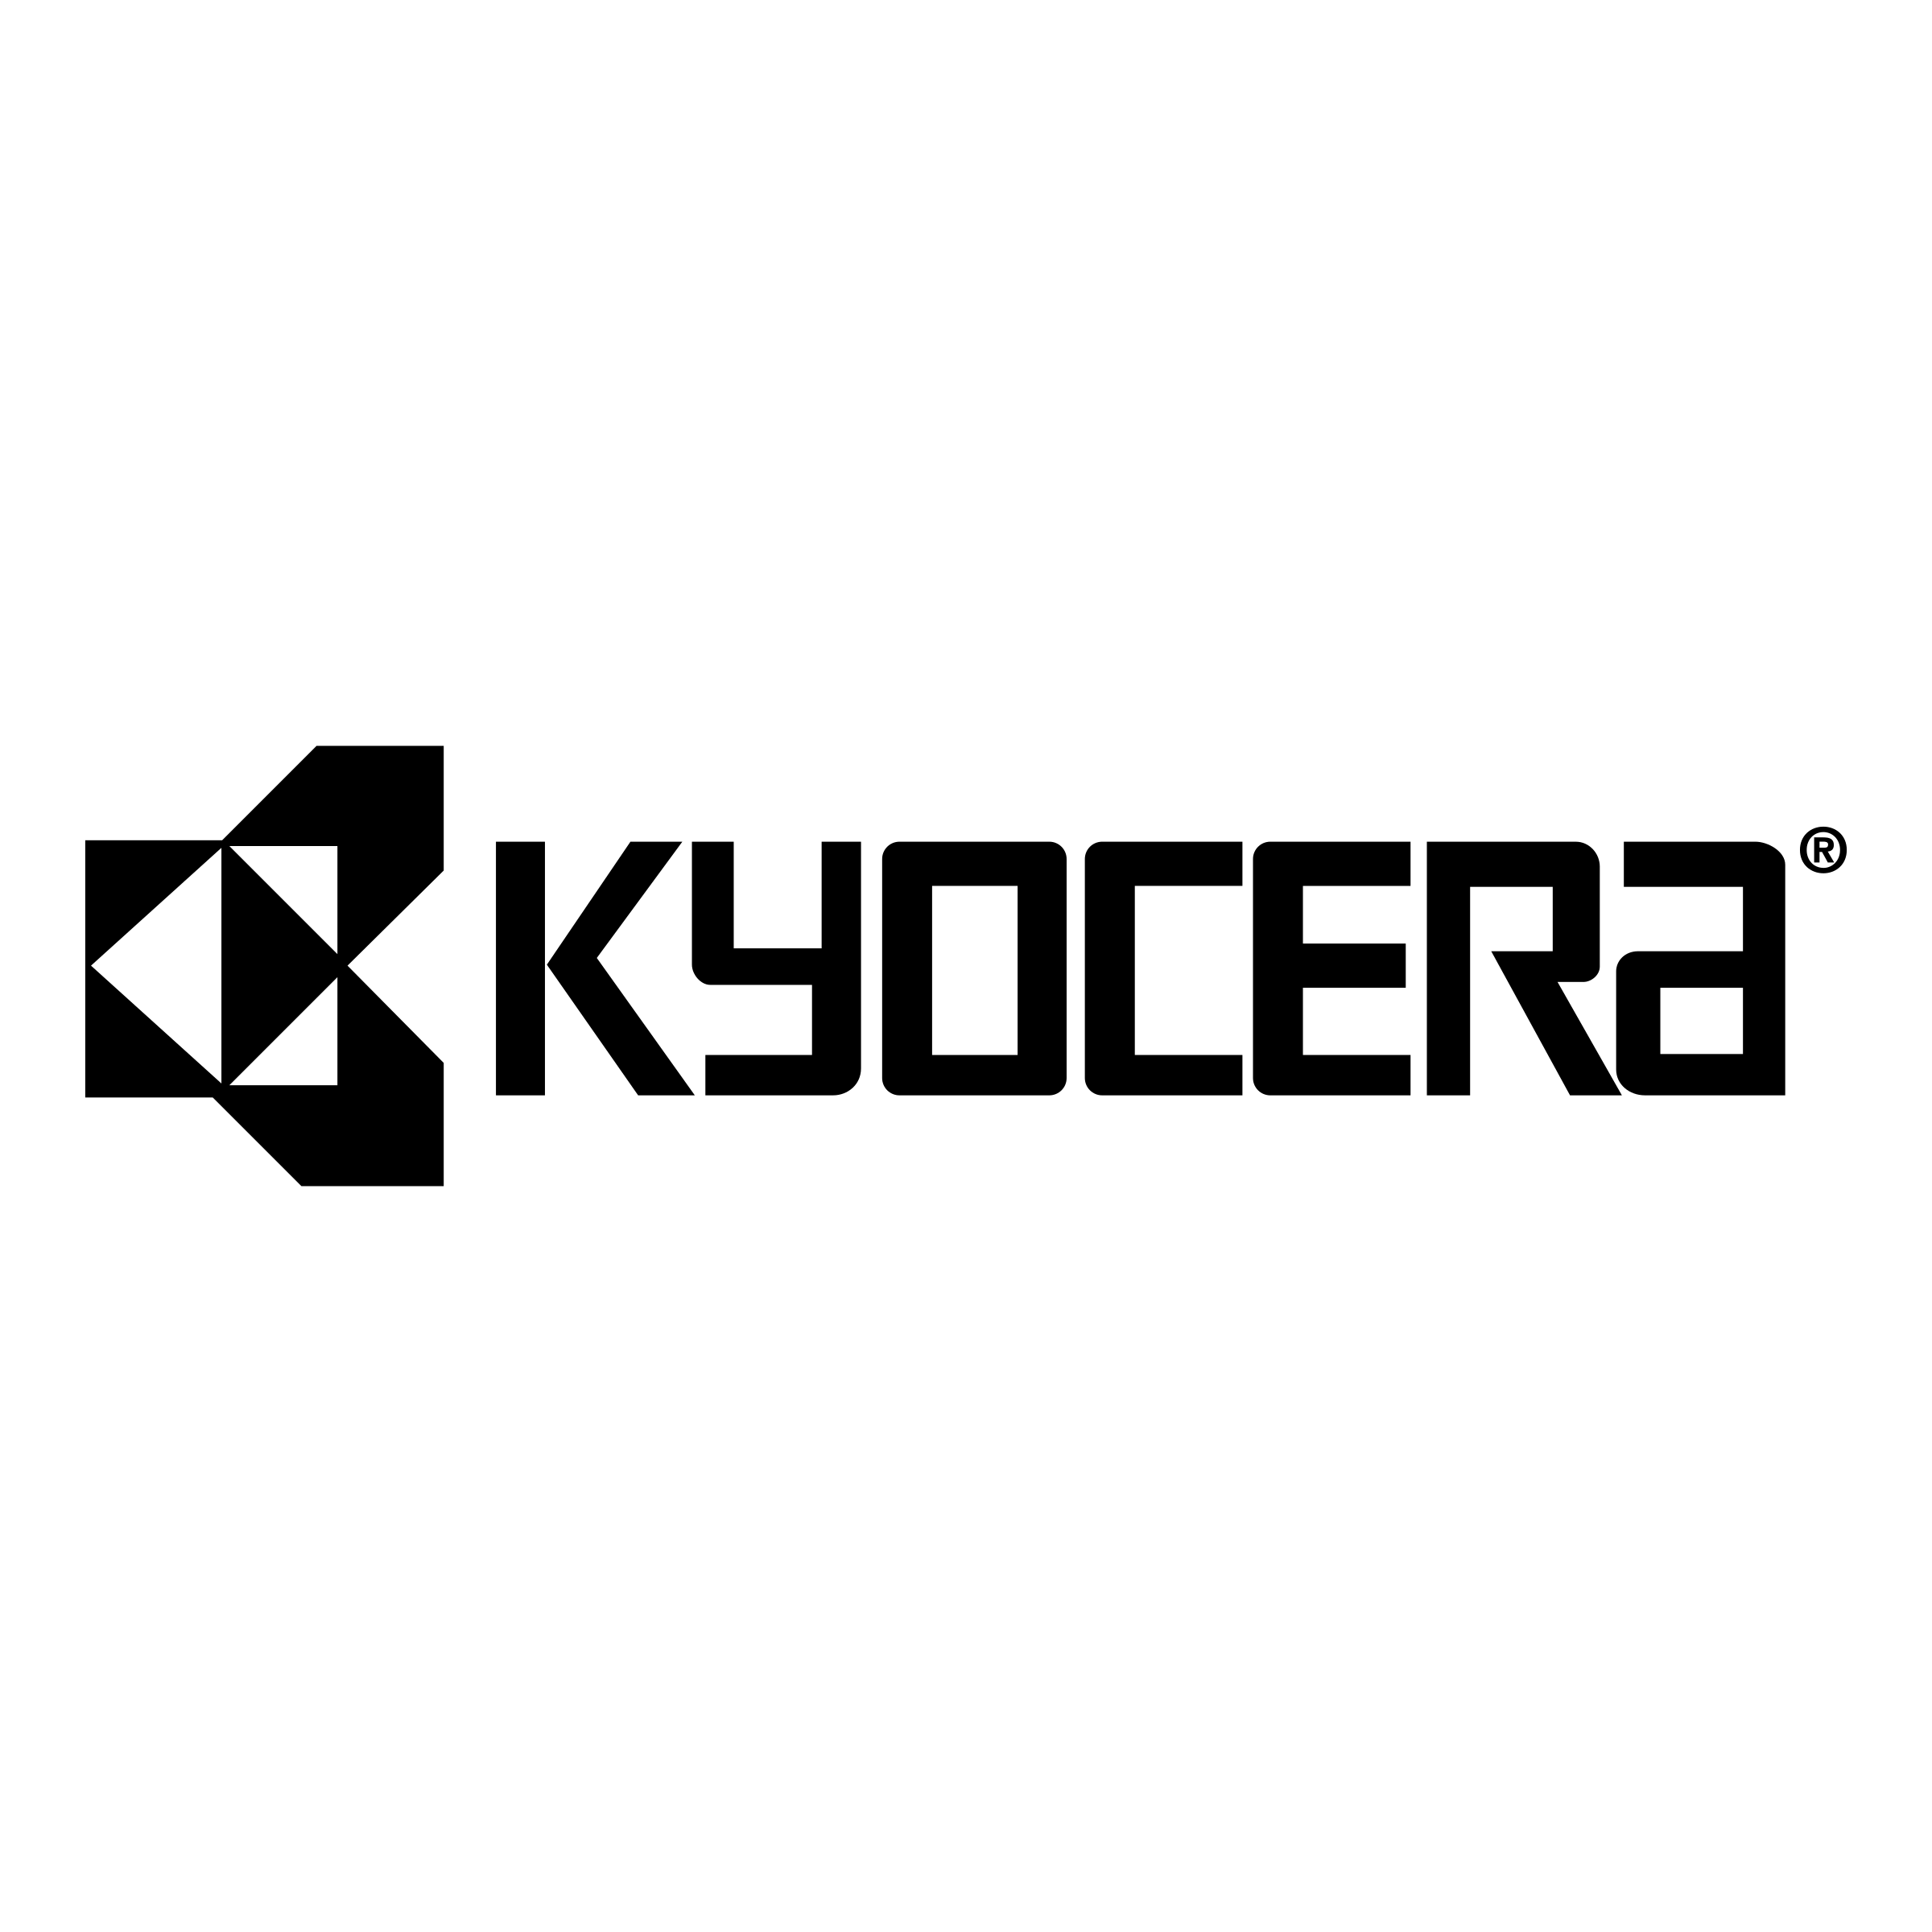 Kyrocera Logo - Kyocera Logo PNG Transparent & SVG Vector - Freebie Supply